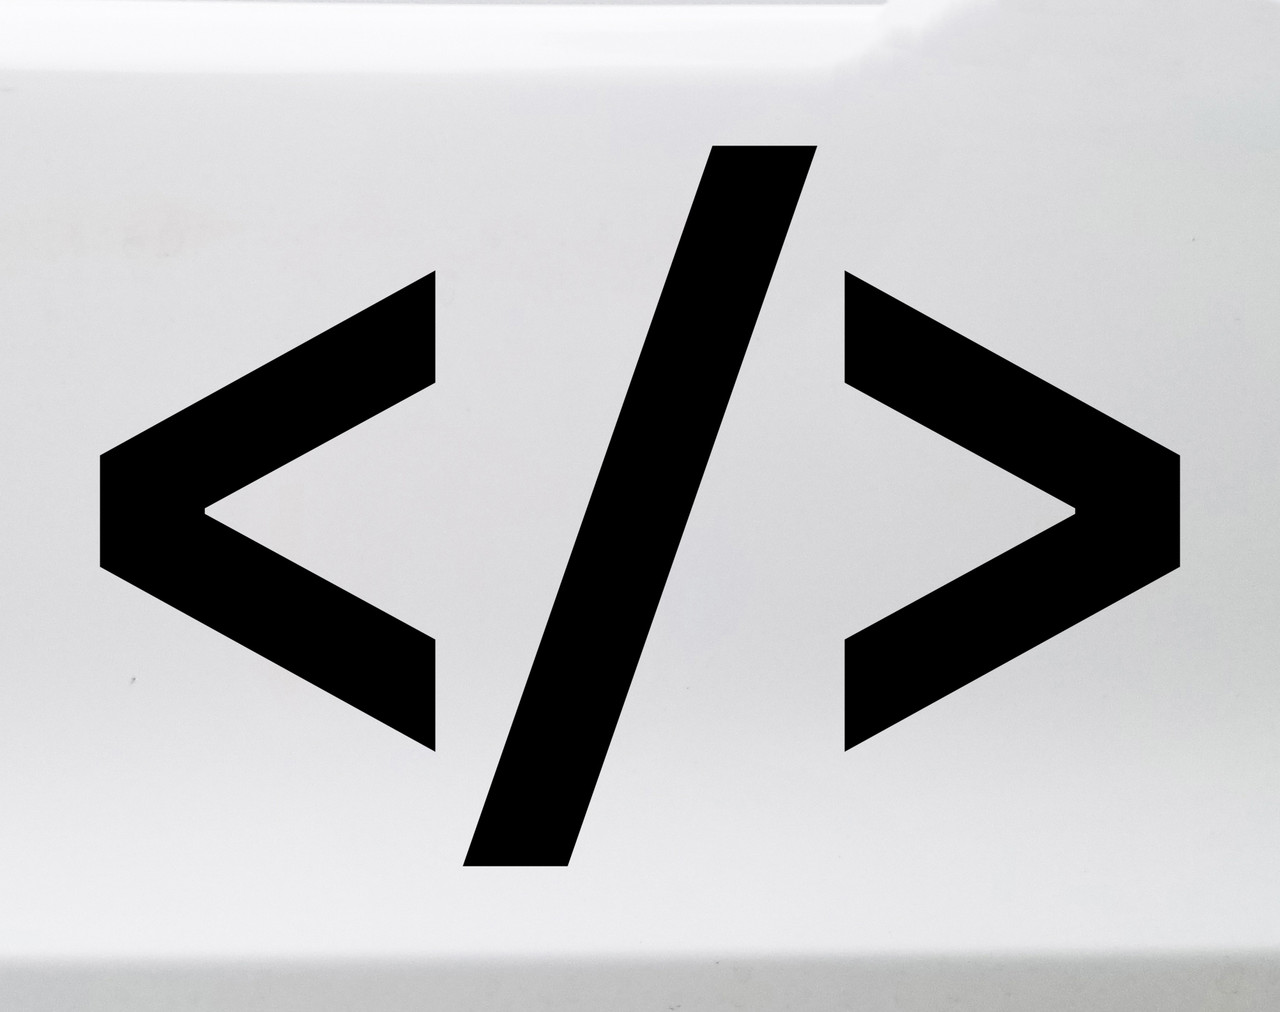 Coding Symbol Vinyl Decal - Programming Software Development - Die Cut Sticker
